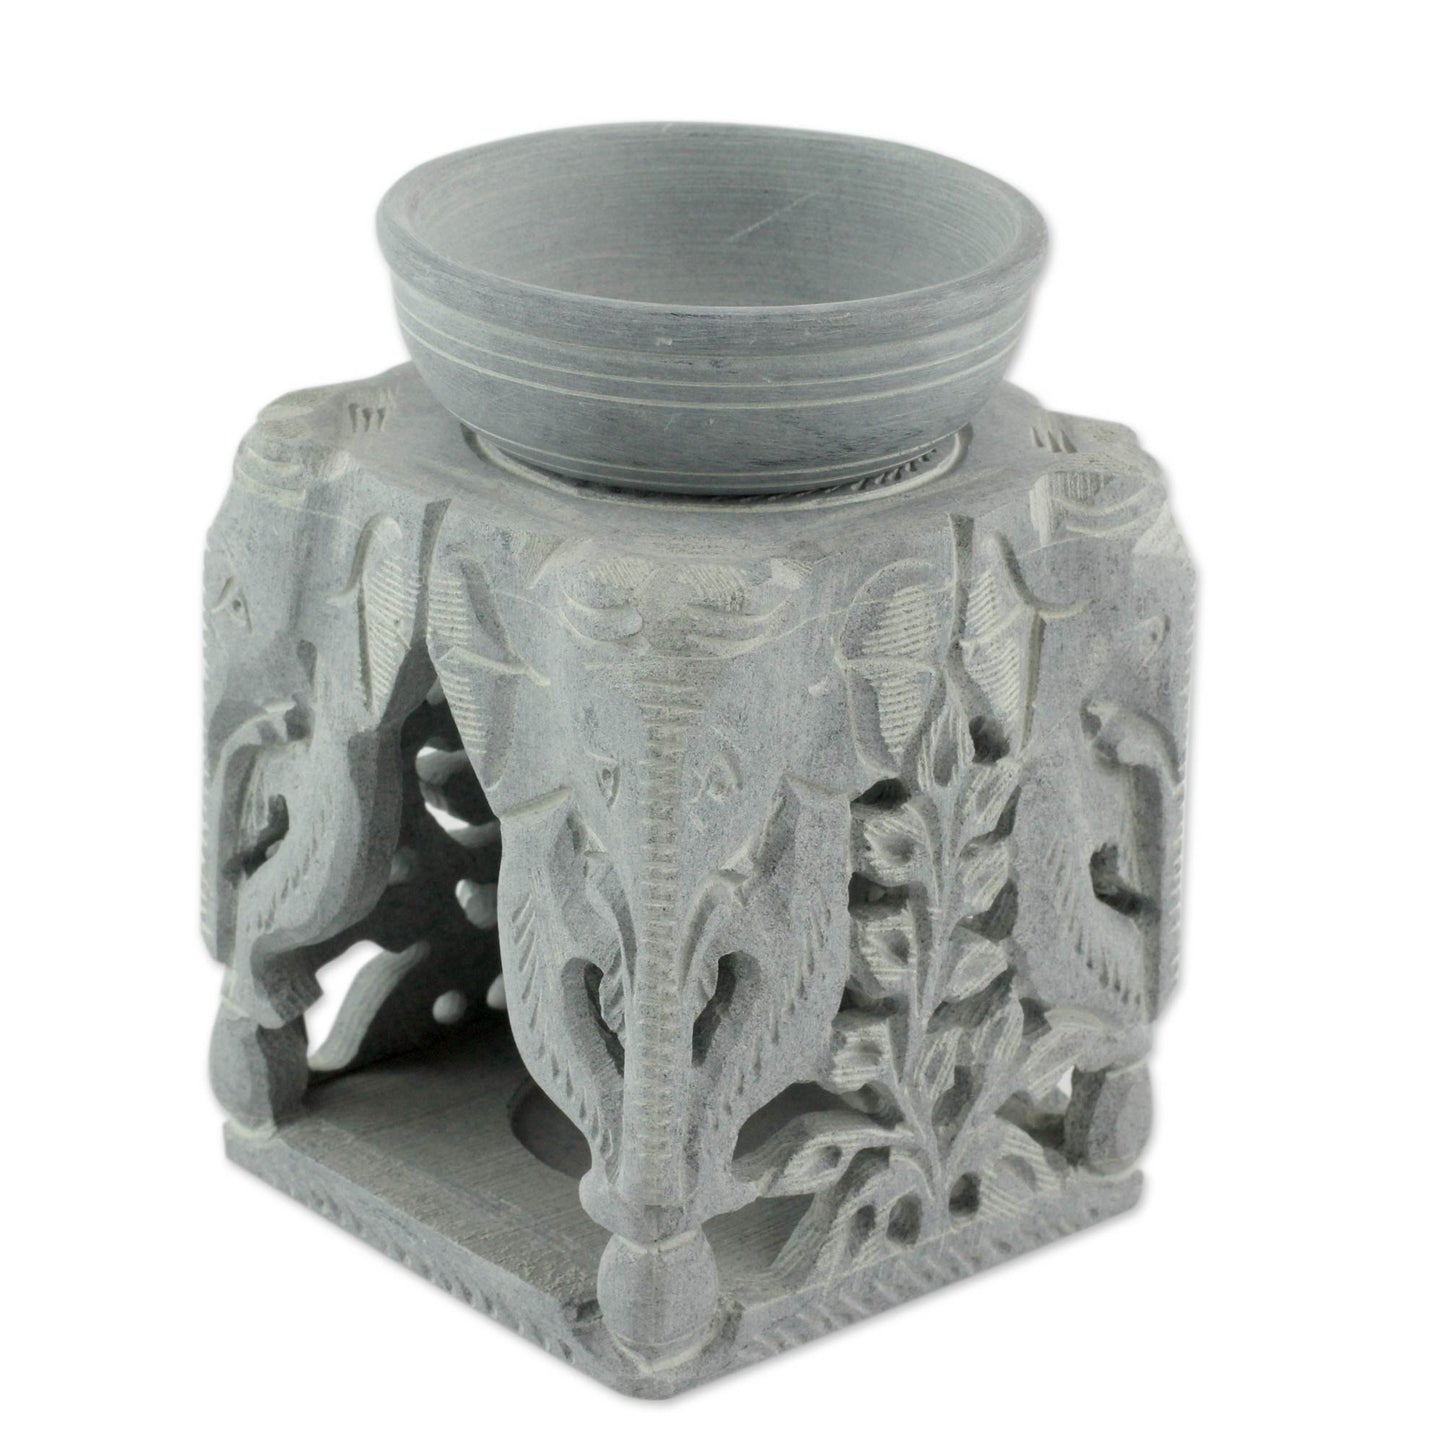 Agra Elephants Oil Warmer Hand-carved of Soapstone